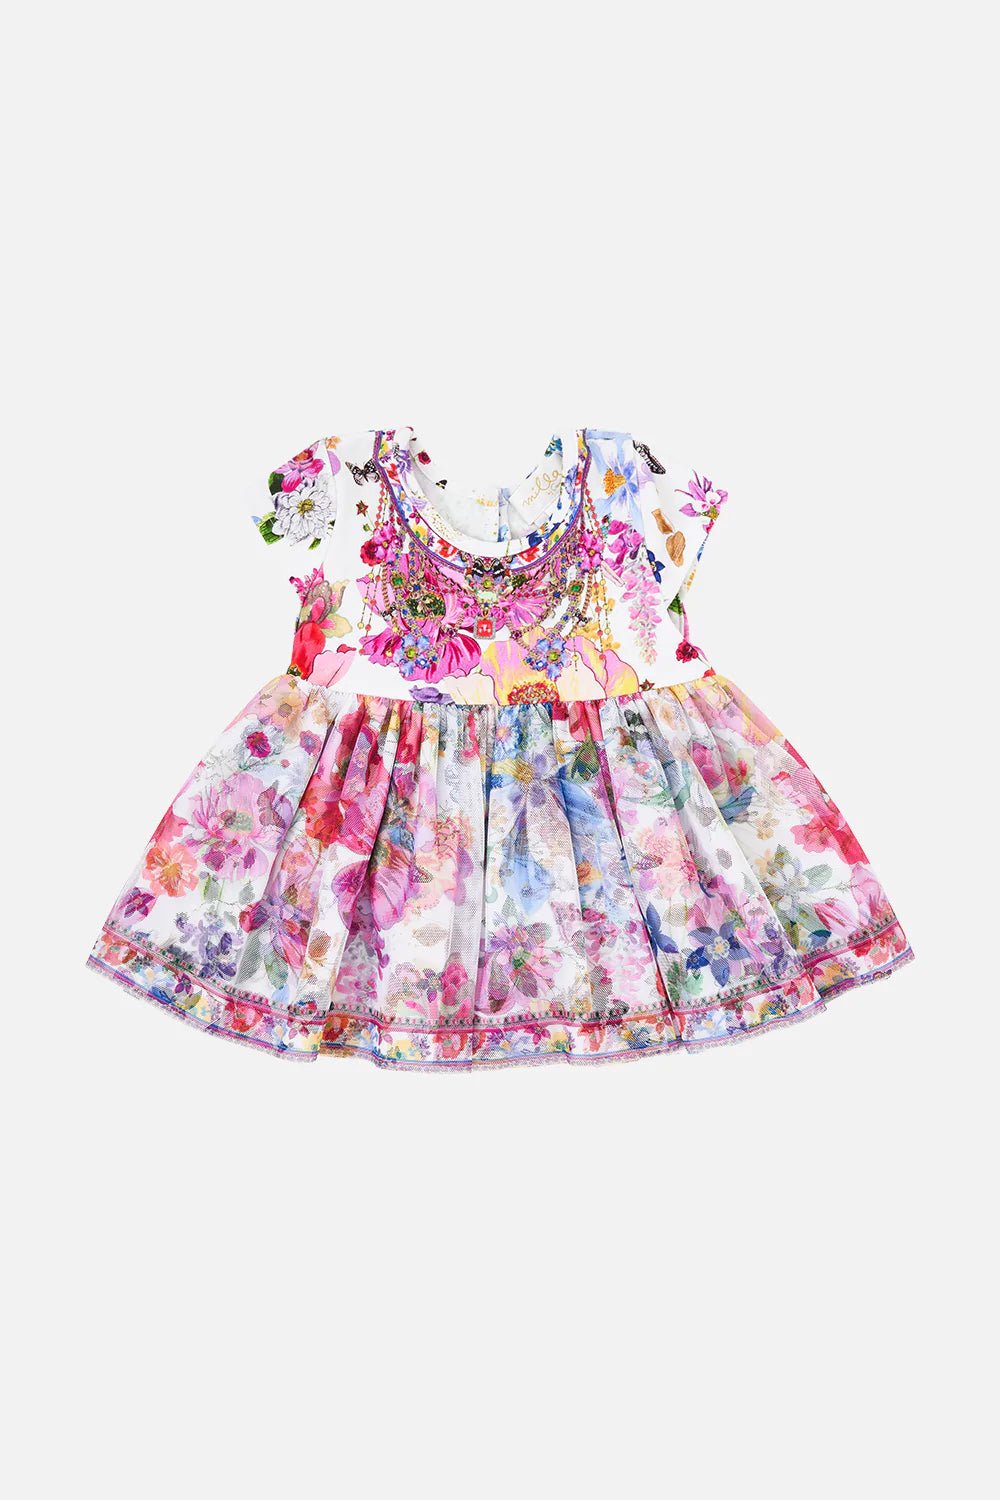 CAMILLA - Babies Jersey Tulle Dress Fairy Gang - Camilla - Pinkhill - darwin fashion - darwin boutique